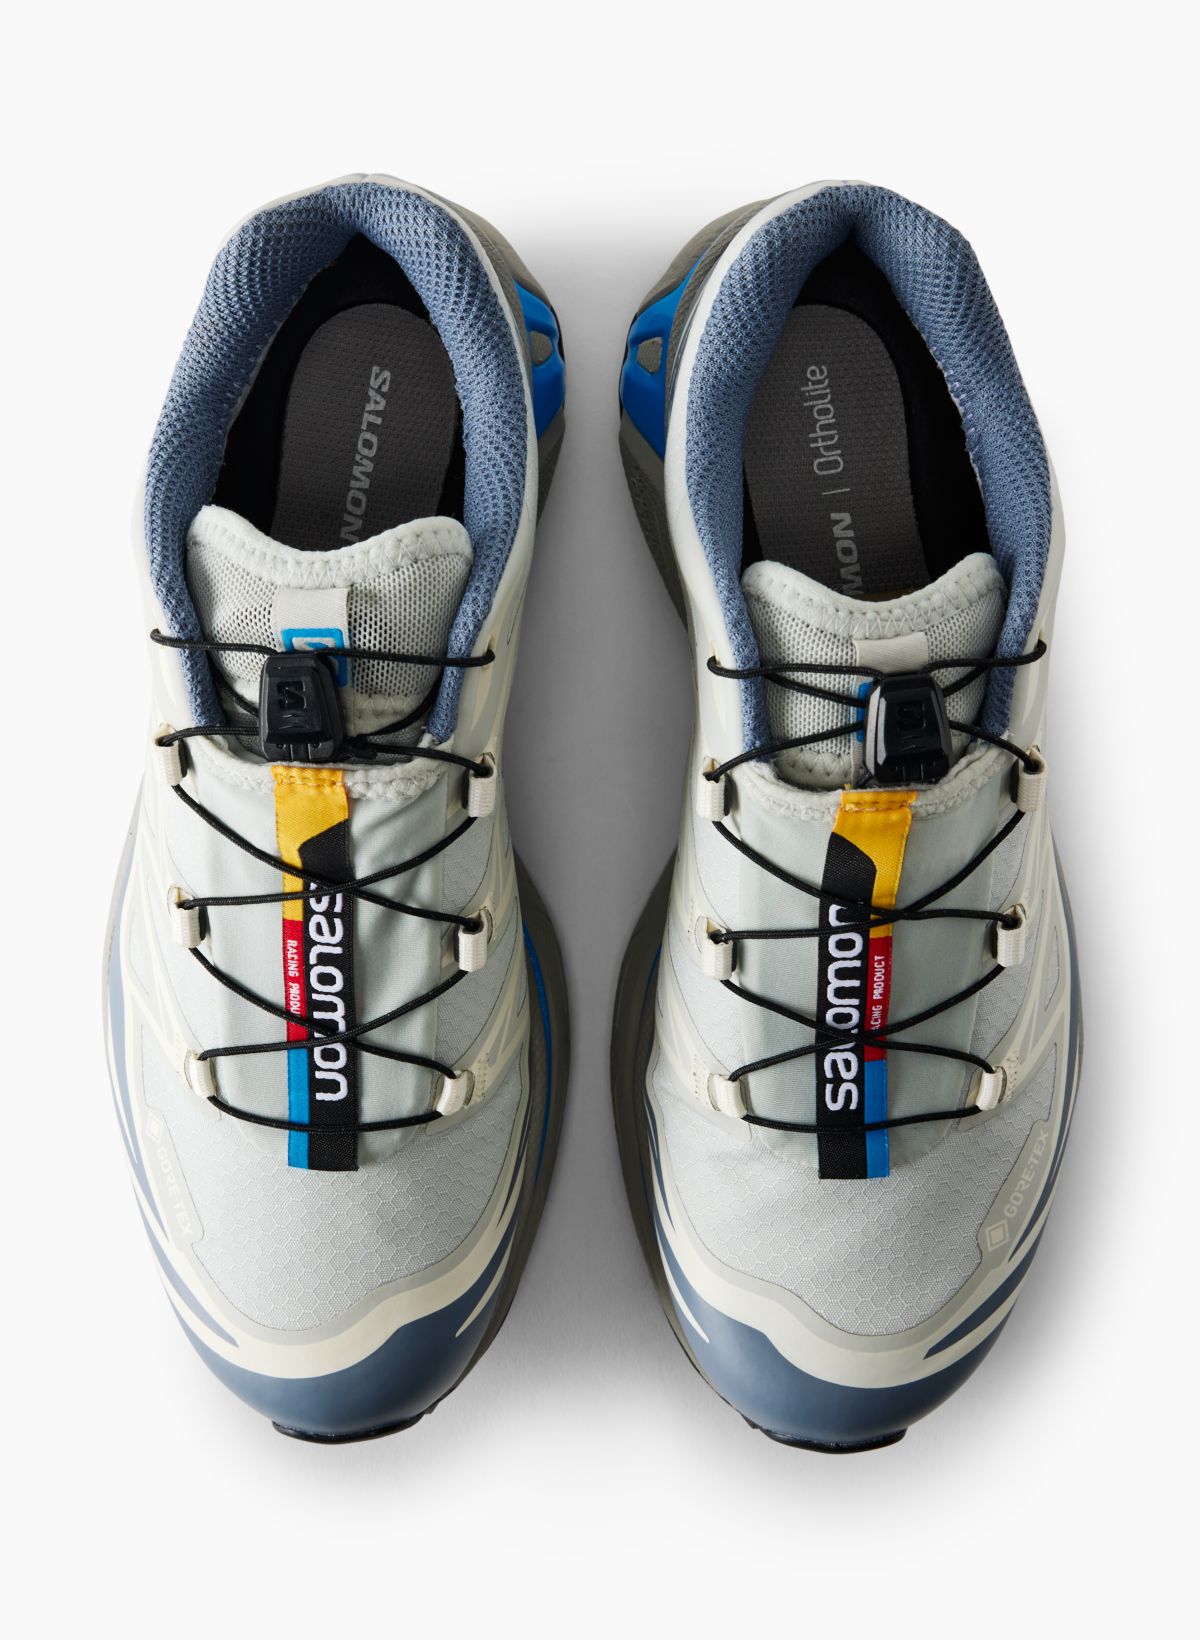 Salomon XT-6 Goretex : r/Sneakers